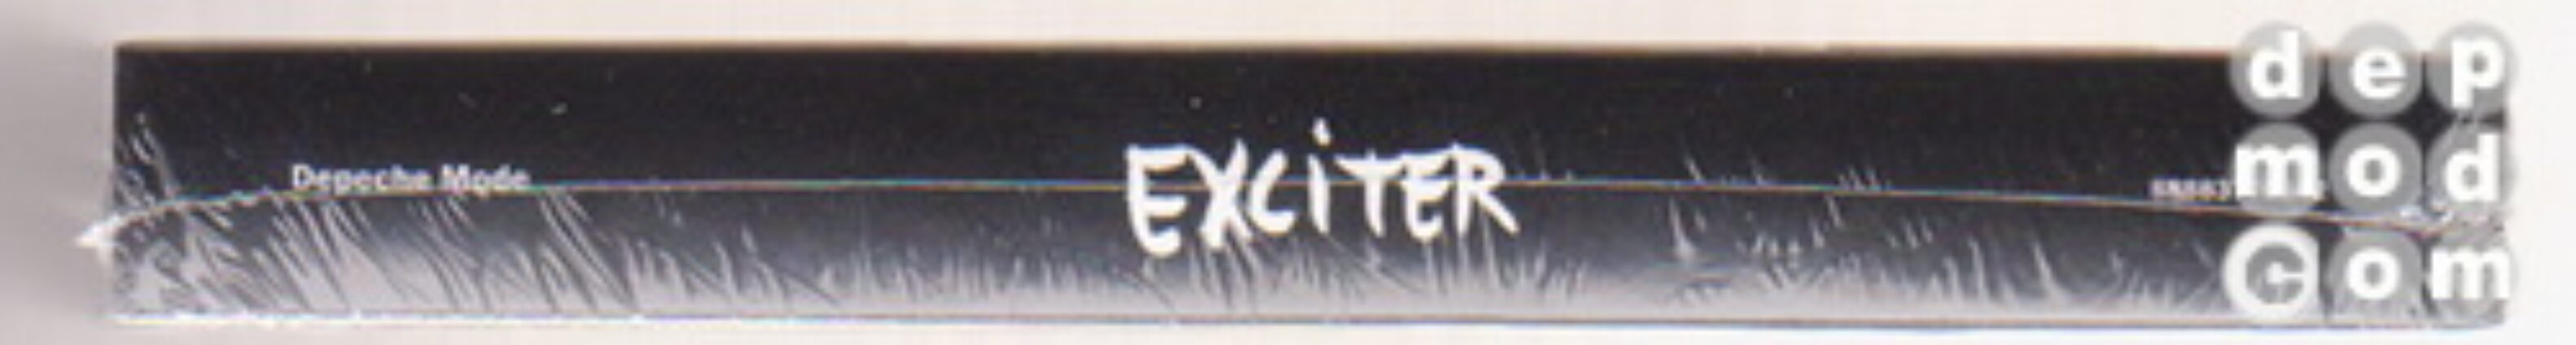 Exciter 3